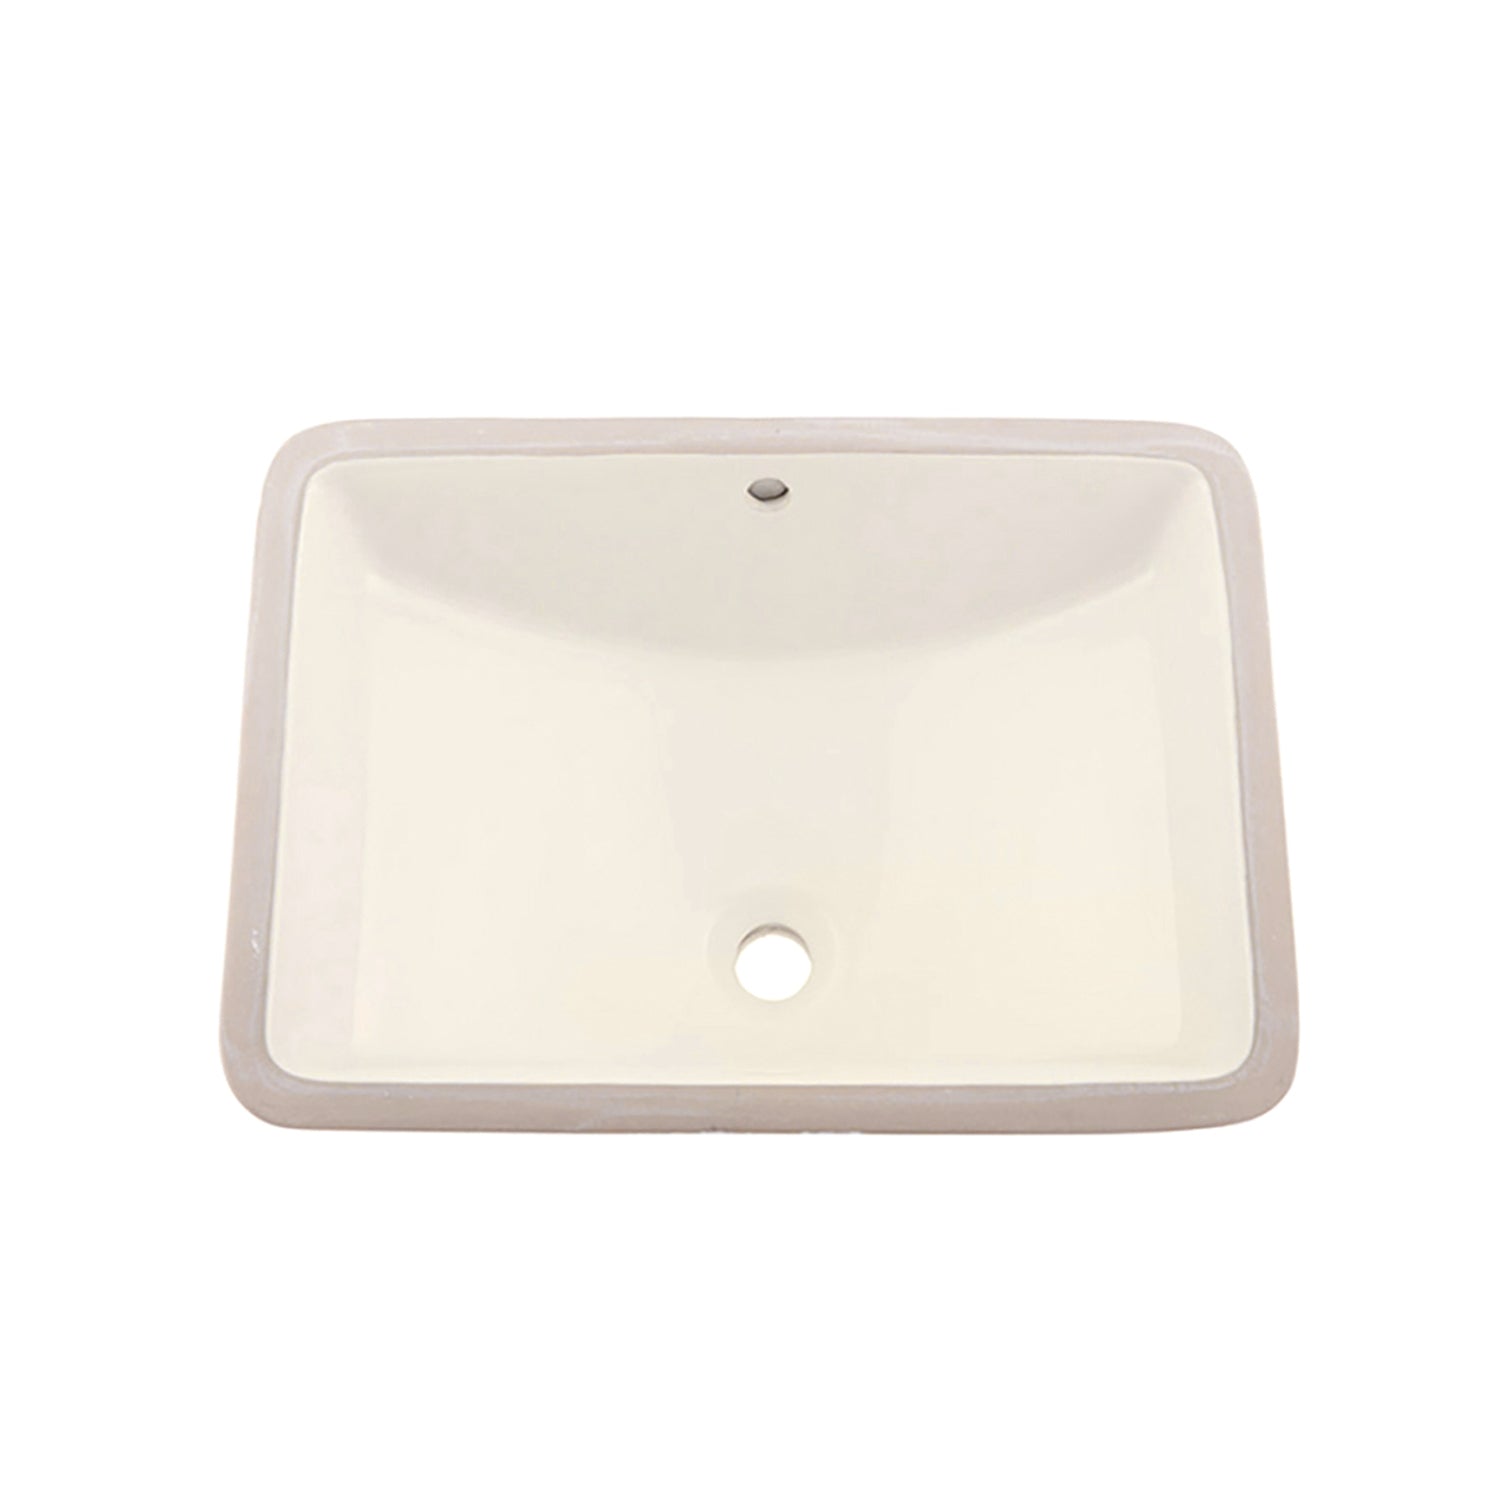 DAX Ceramic Square Single Bowl Undermount Bathroom Sink, Ivory Finish, 22-1/6 x 15-1/2 x 8-5/16 Inches (BSN-202G-I)